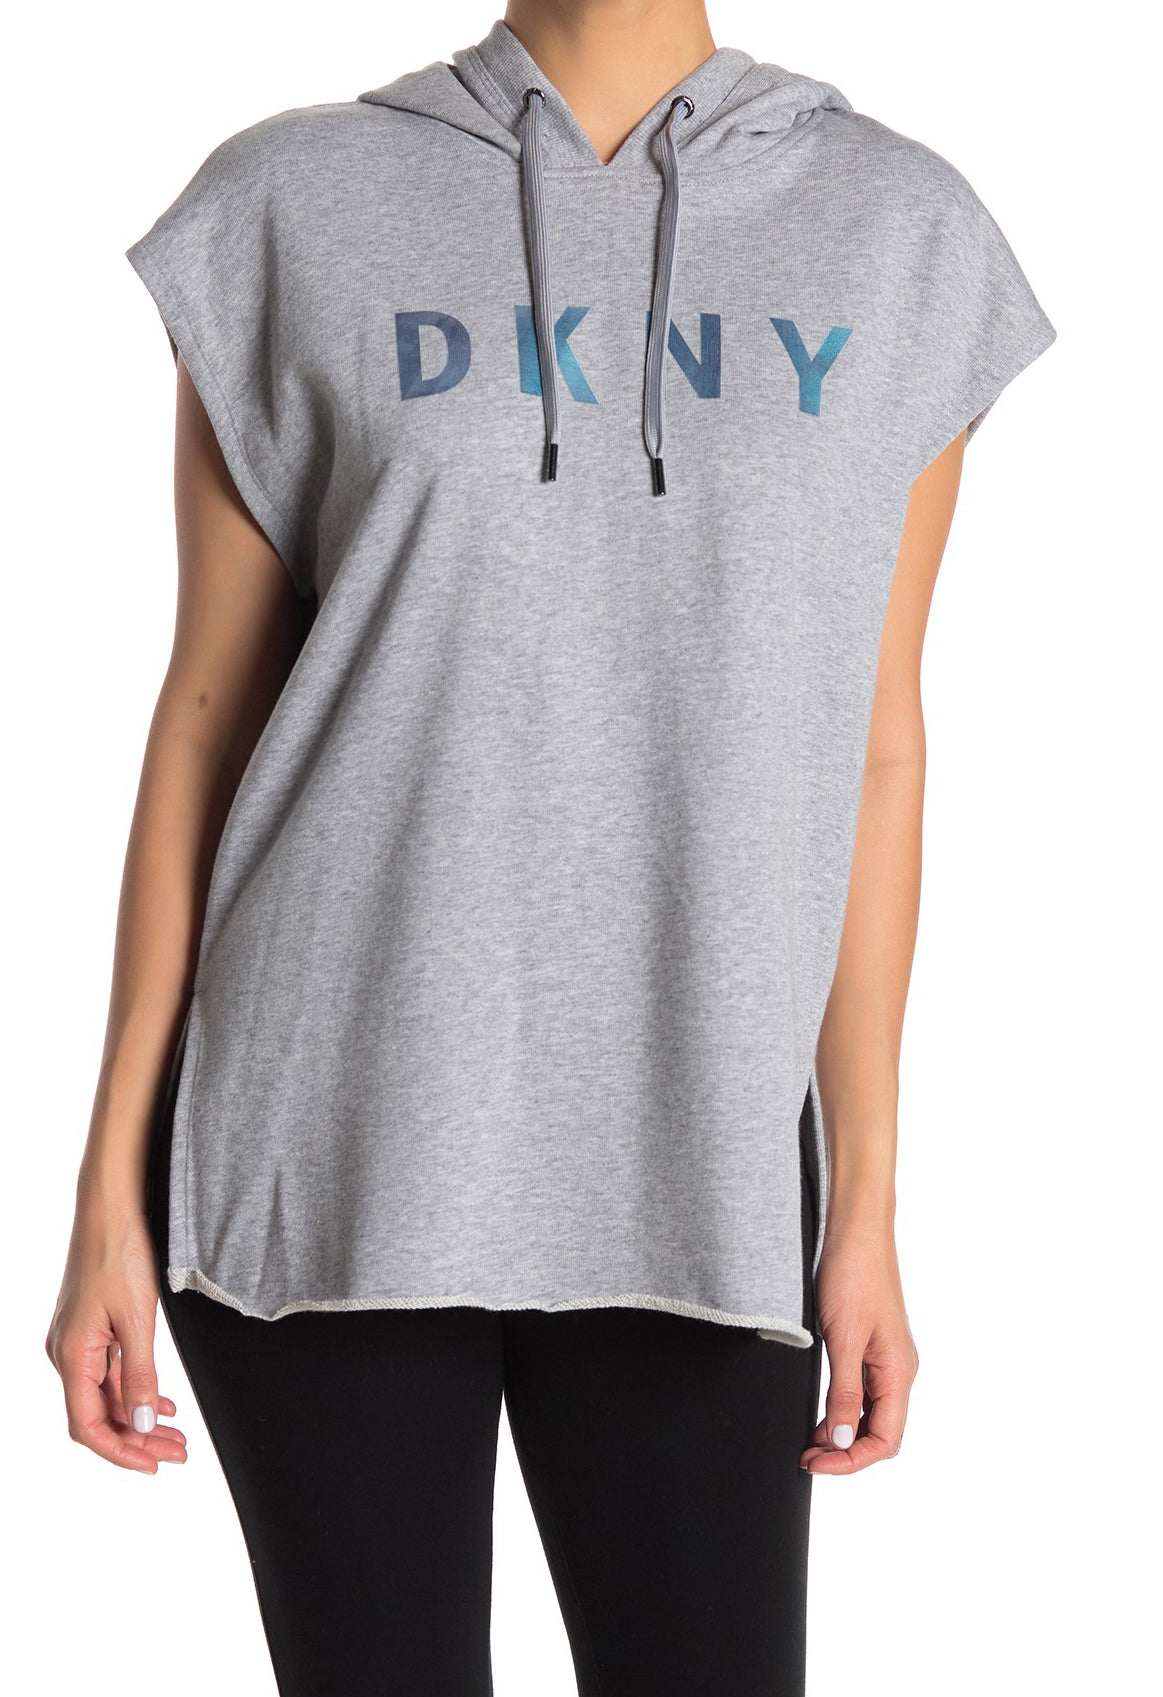 DKNY Womens Sleeveless Oversized Sweatshirt